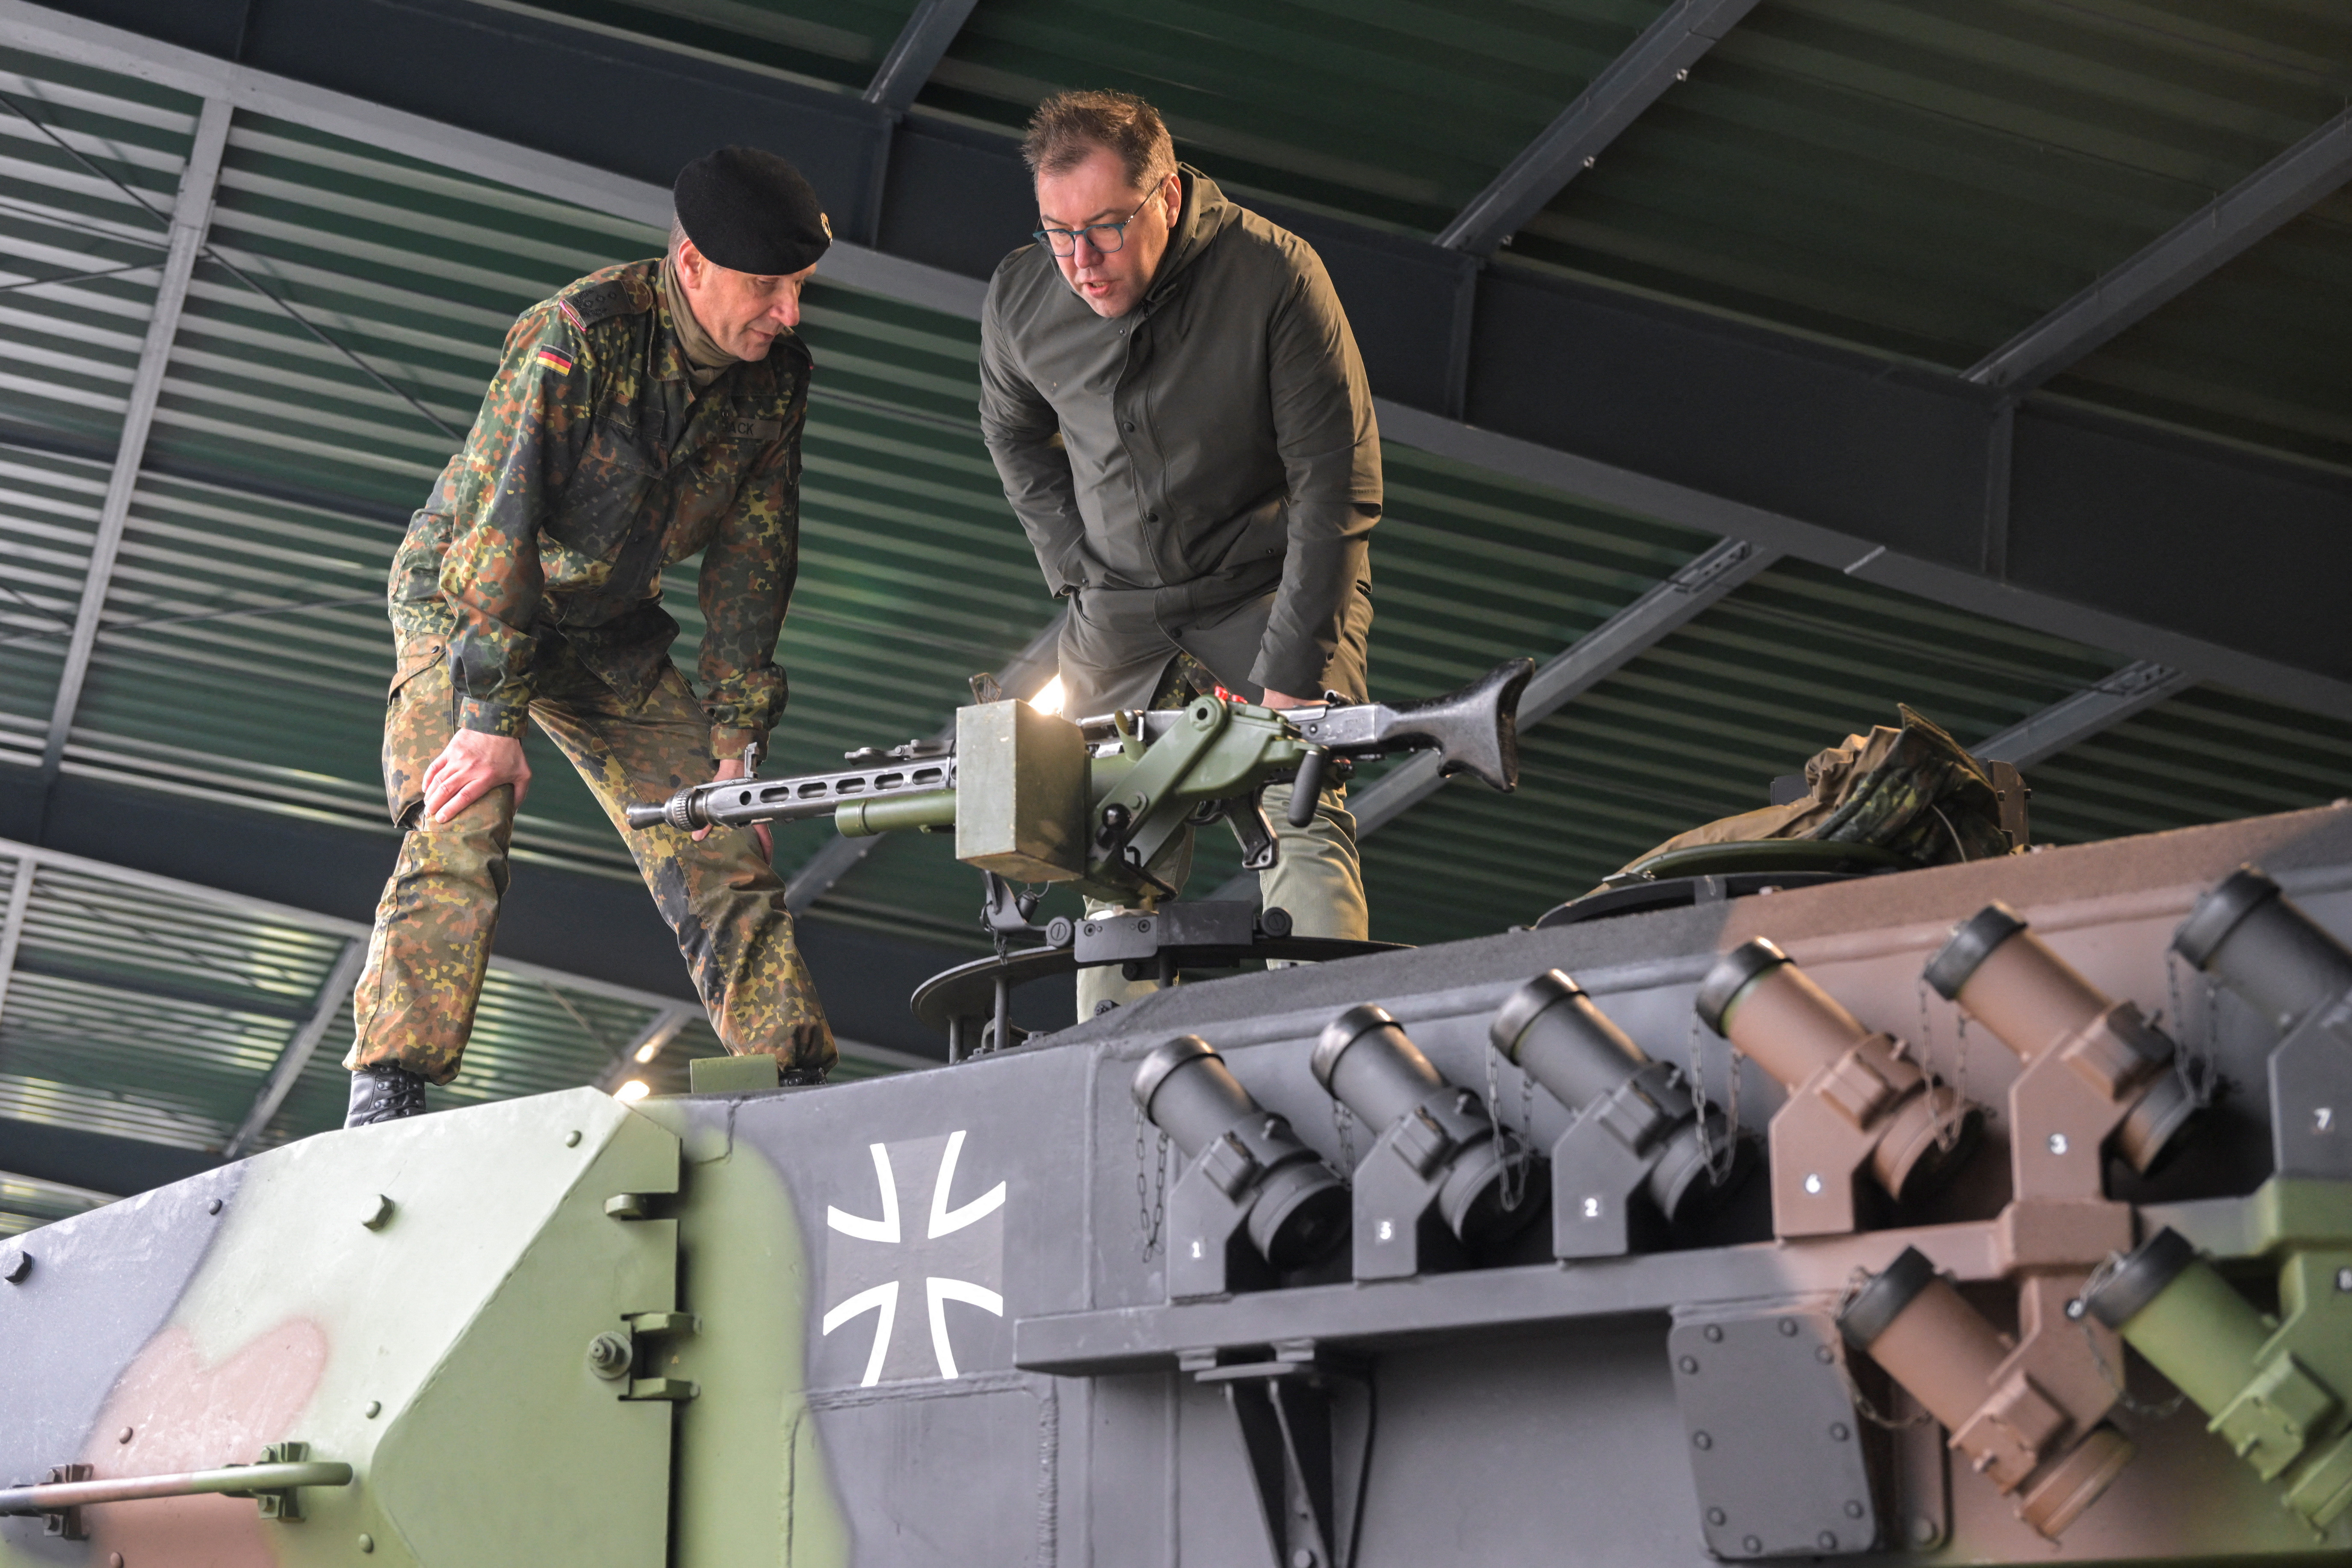 Leopard tanks like a Mercedes, says Ukrainian soldier training in